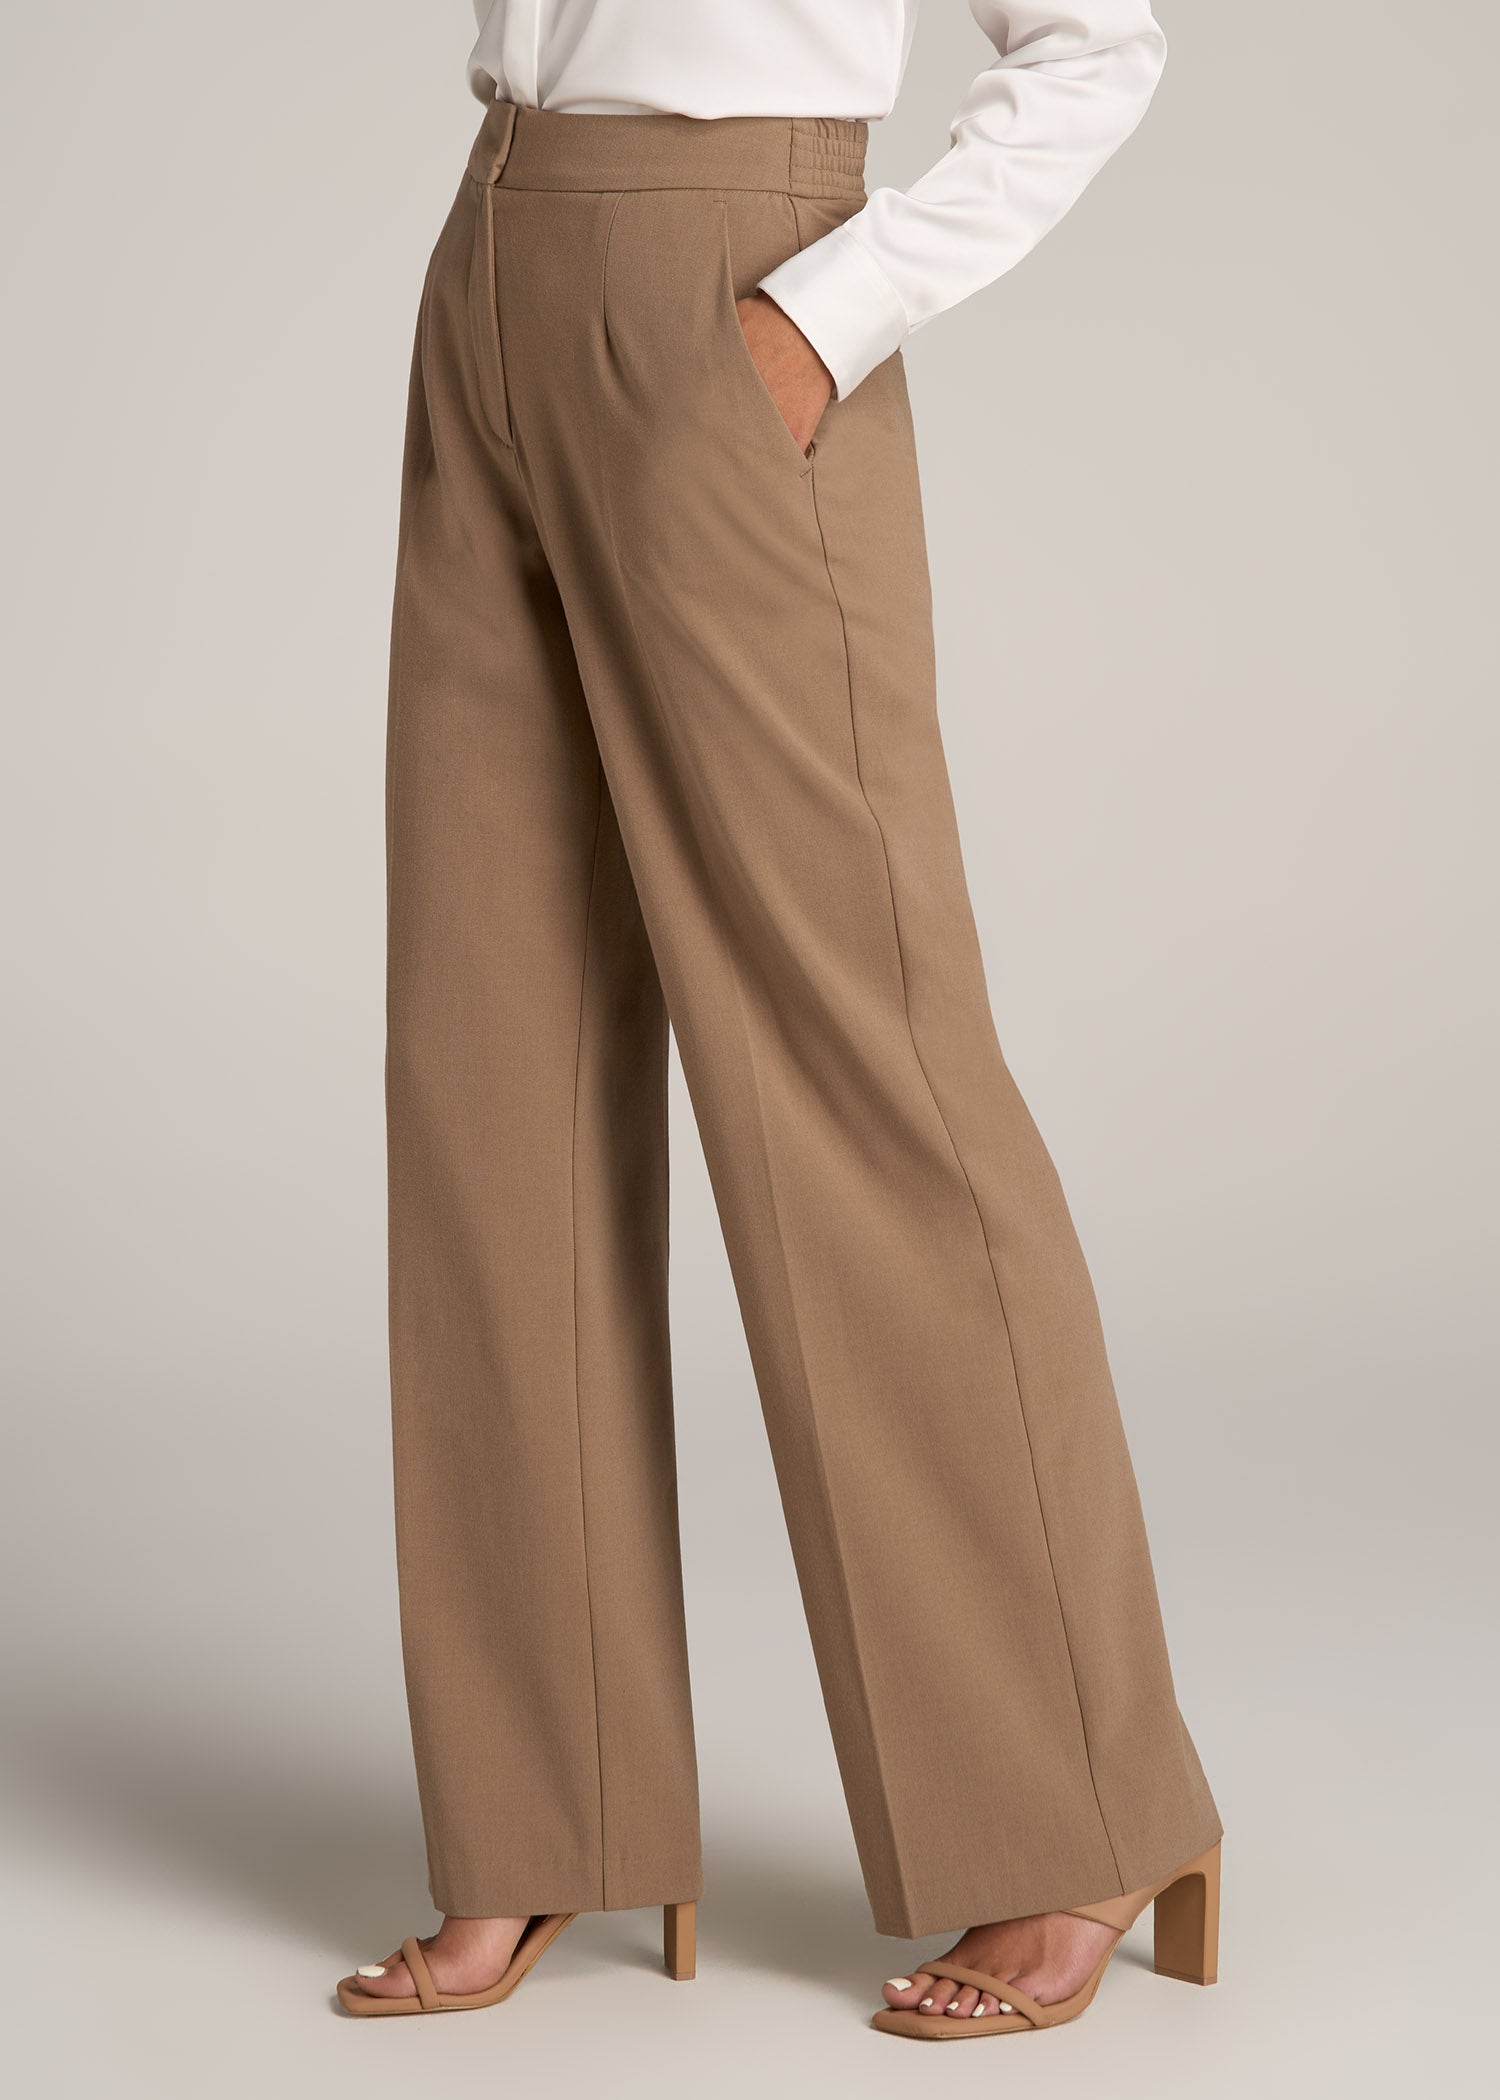 High Rise Dress Pants - Women Wide Leg Pants - Lattelier Store